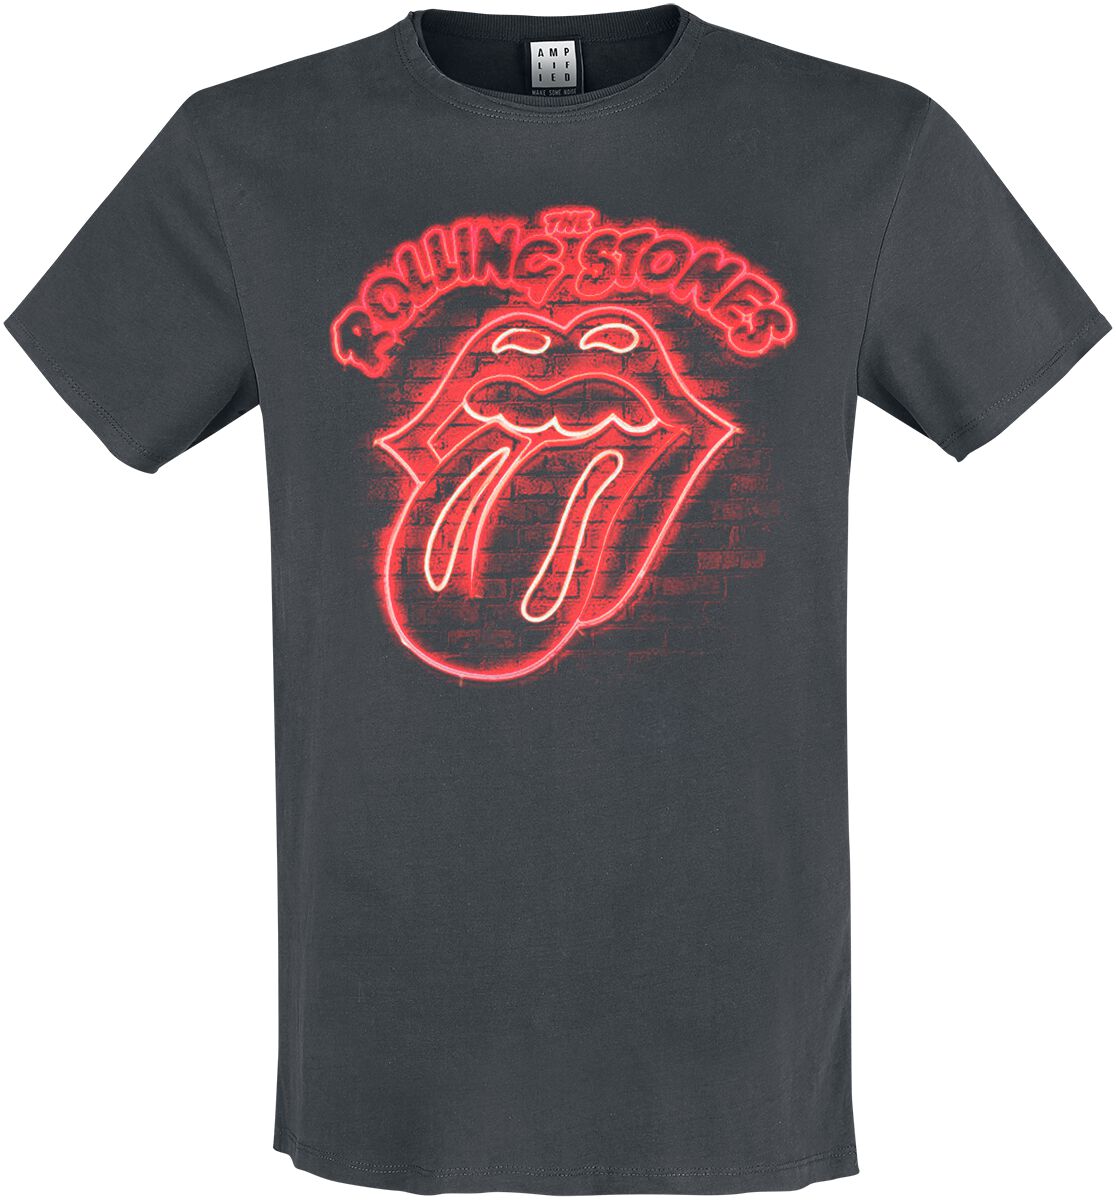 The Rolling Stones T-Shirt - Amplified Collection - Neon Light - S bis XL - für Männer - Größe XL - charcoal  - Lizenziertes Merchandise!